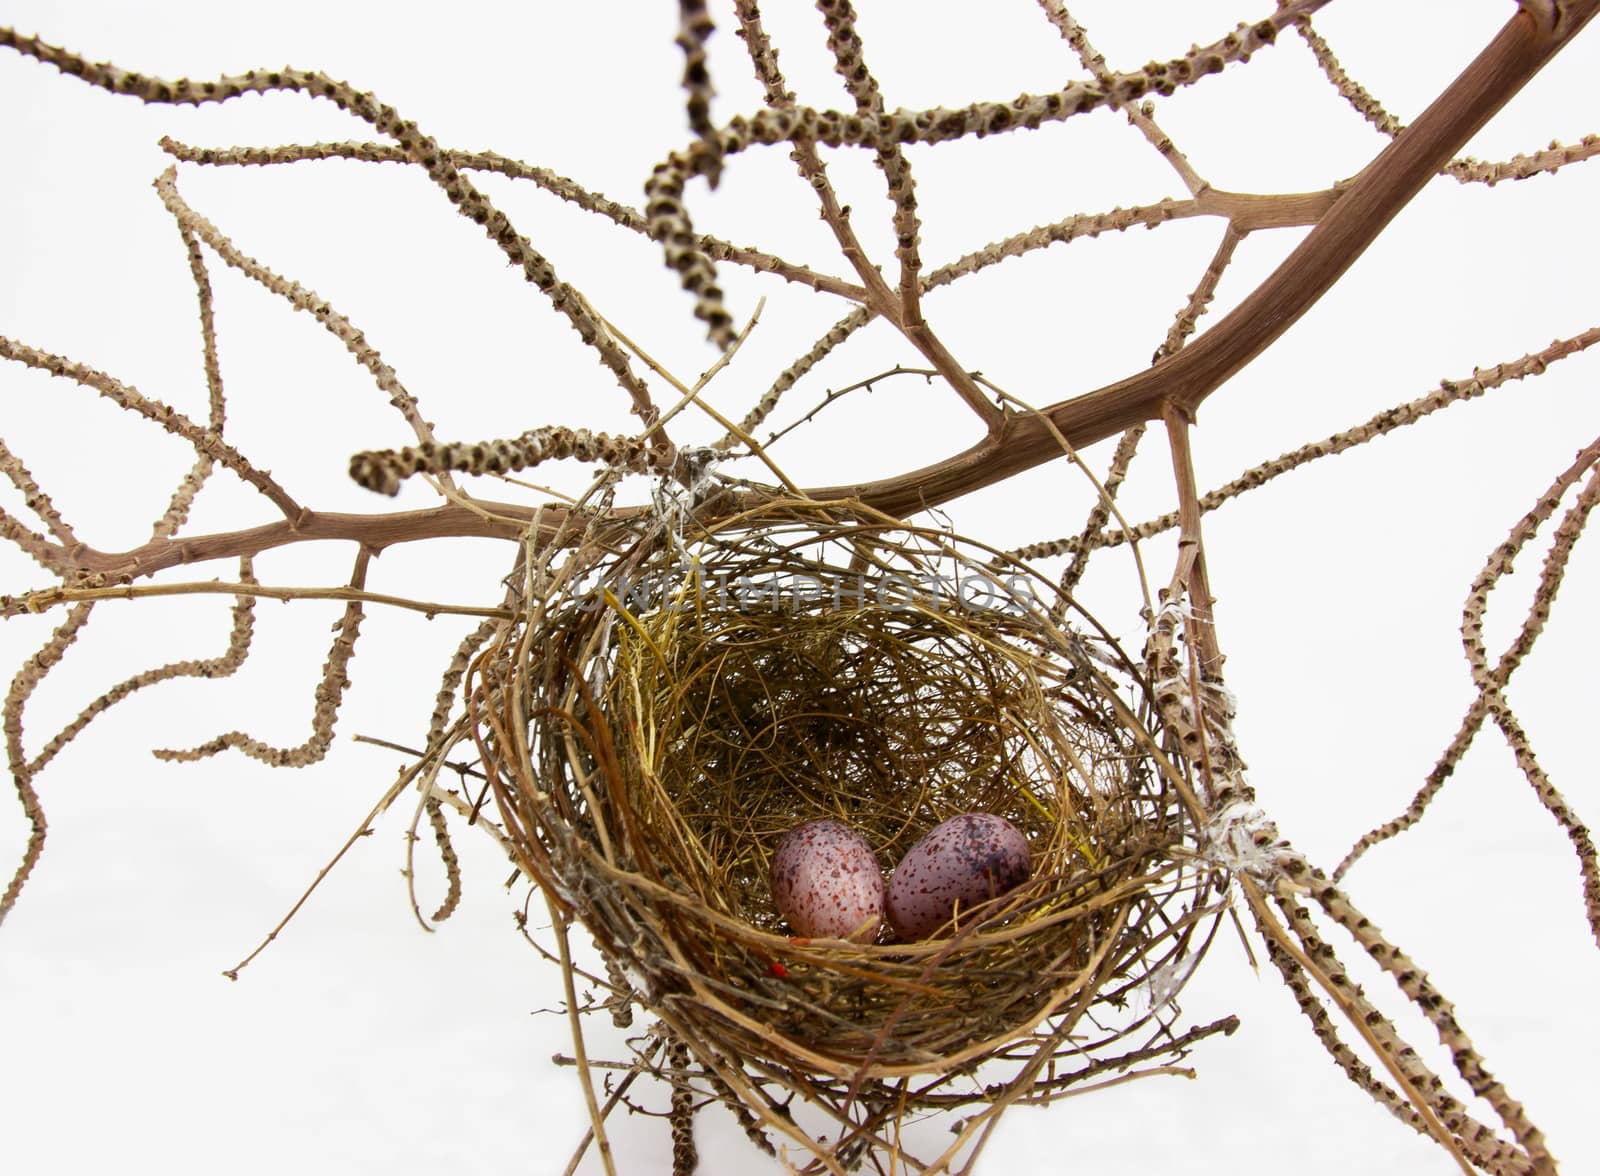 Bird nest and eggs on white background by sutipp11